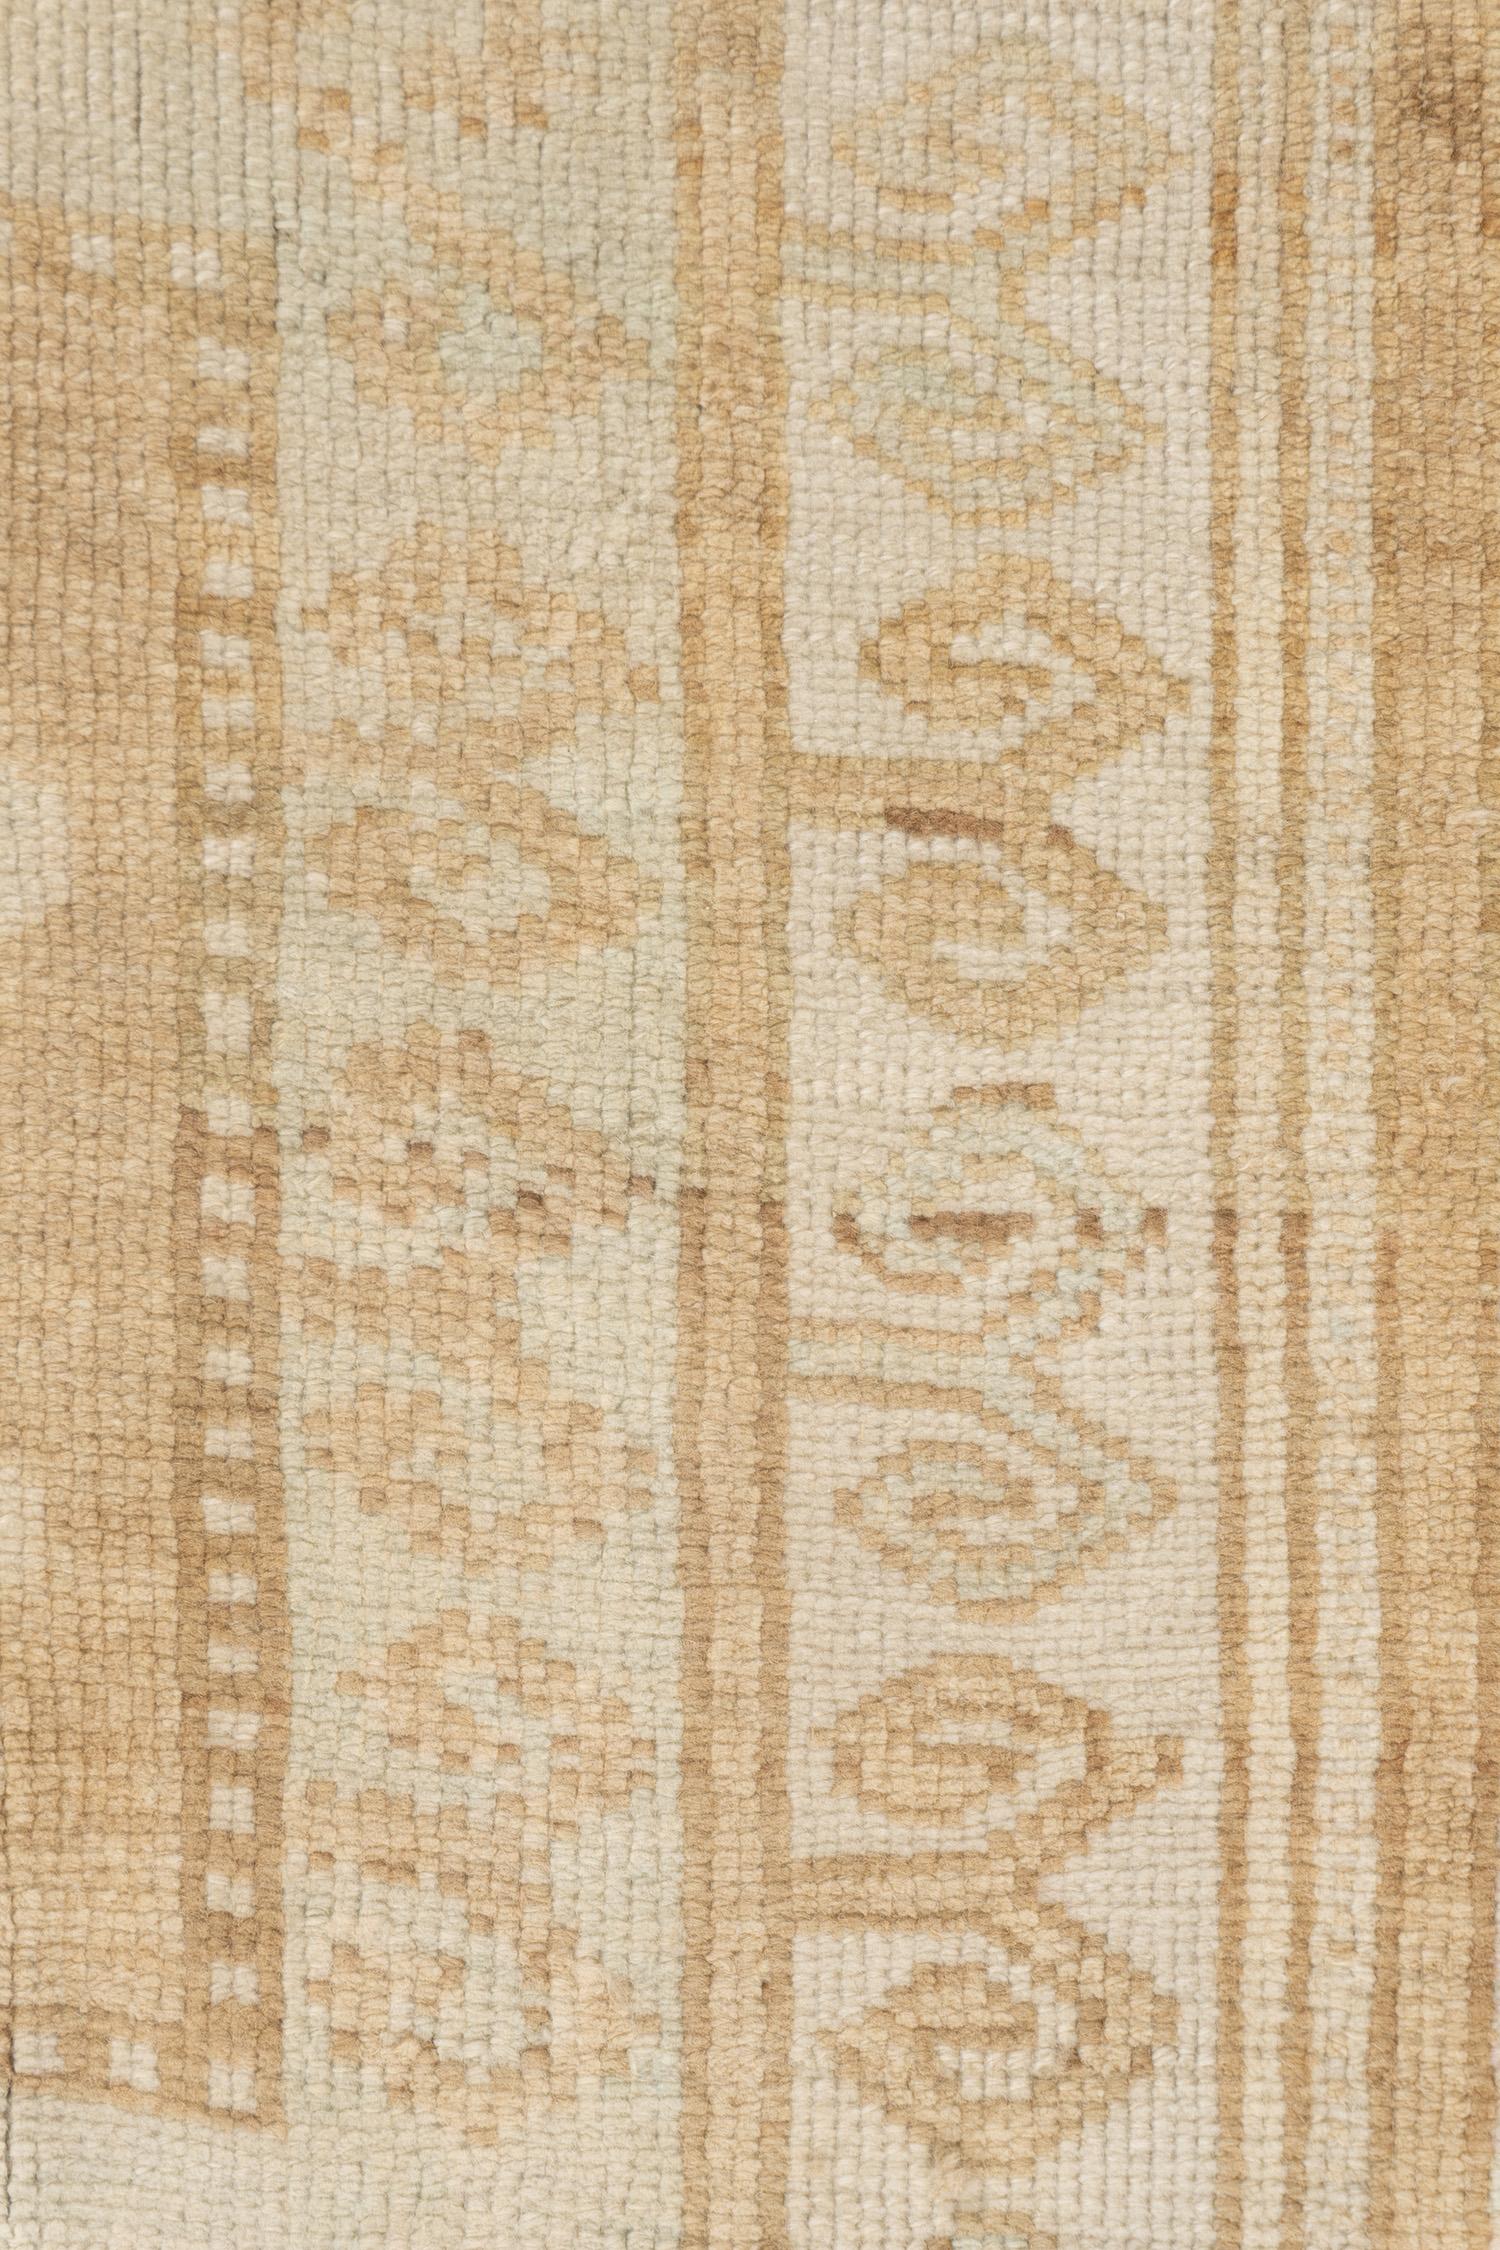 Wool Vintage Oushak Karachof Design Rug 6'5 X 10'5 For Sale